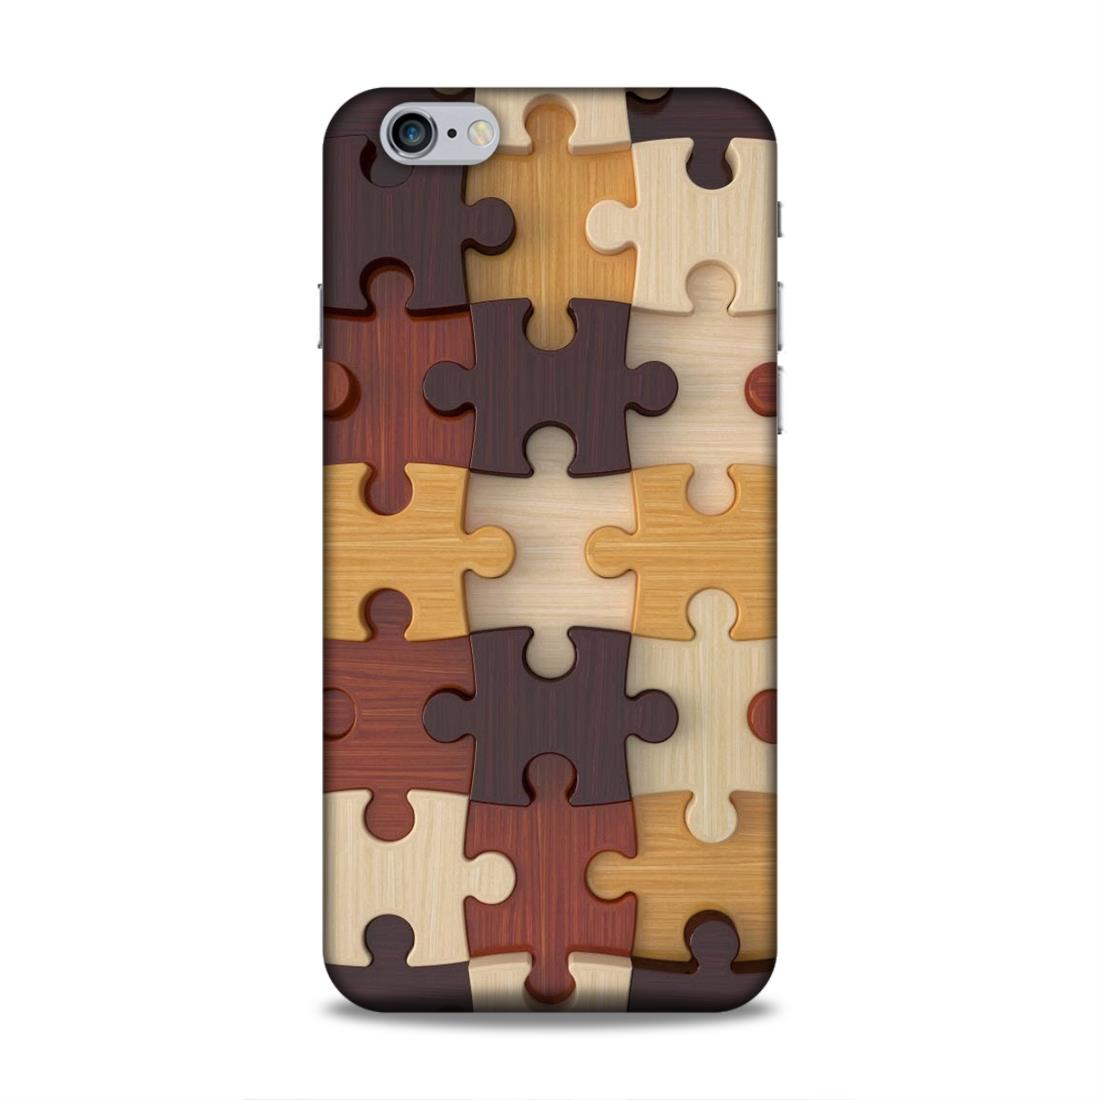 Multi Color Block Puzzle Hard Back Case For Apple iPhone 6 Plus / 6s Plus